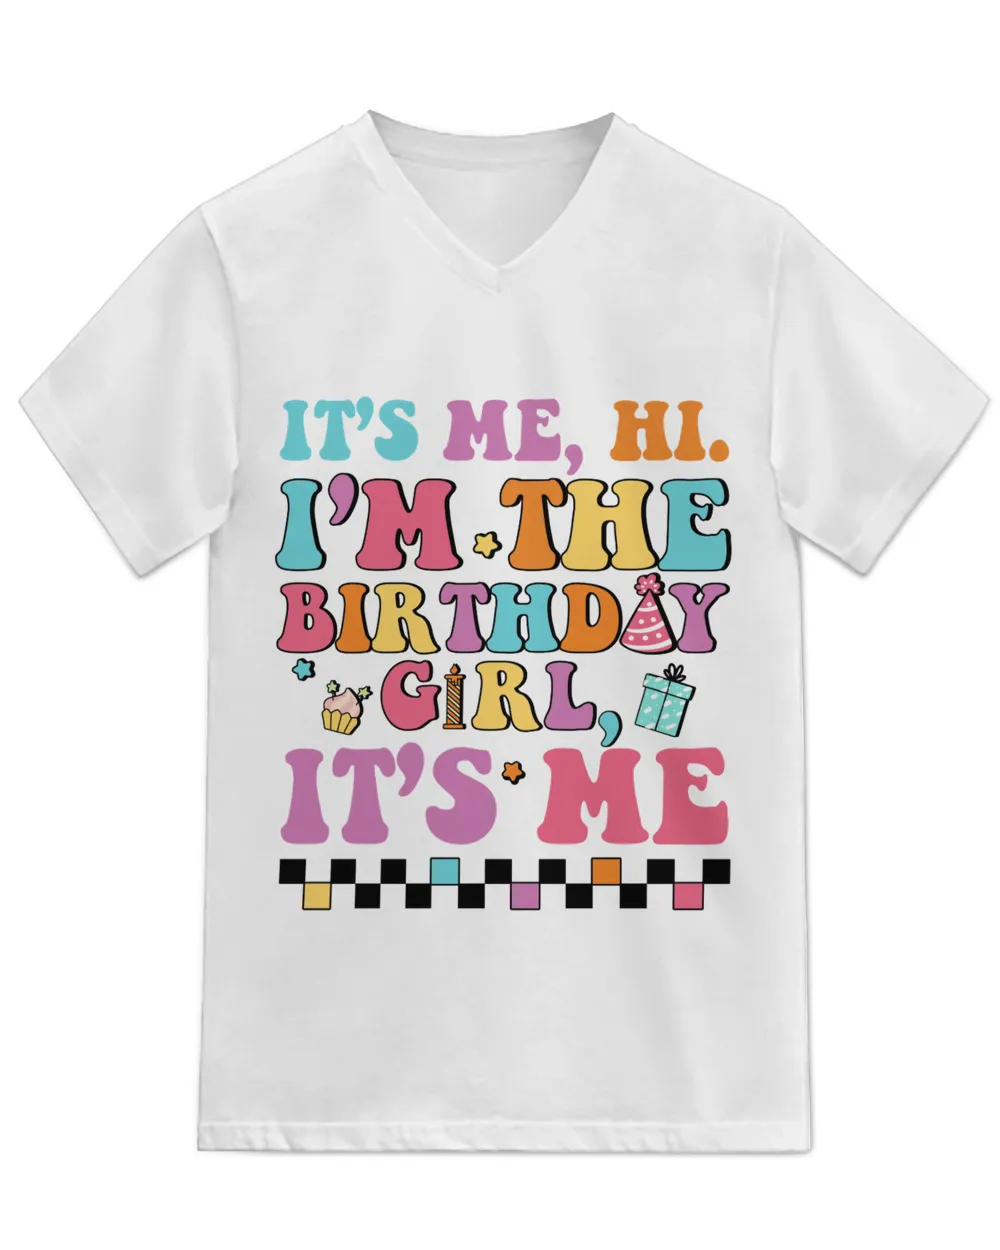 Birthday Party Shirt Its Me Hi Im The Birthday Girl Its Me-01-01-01-01-01